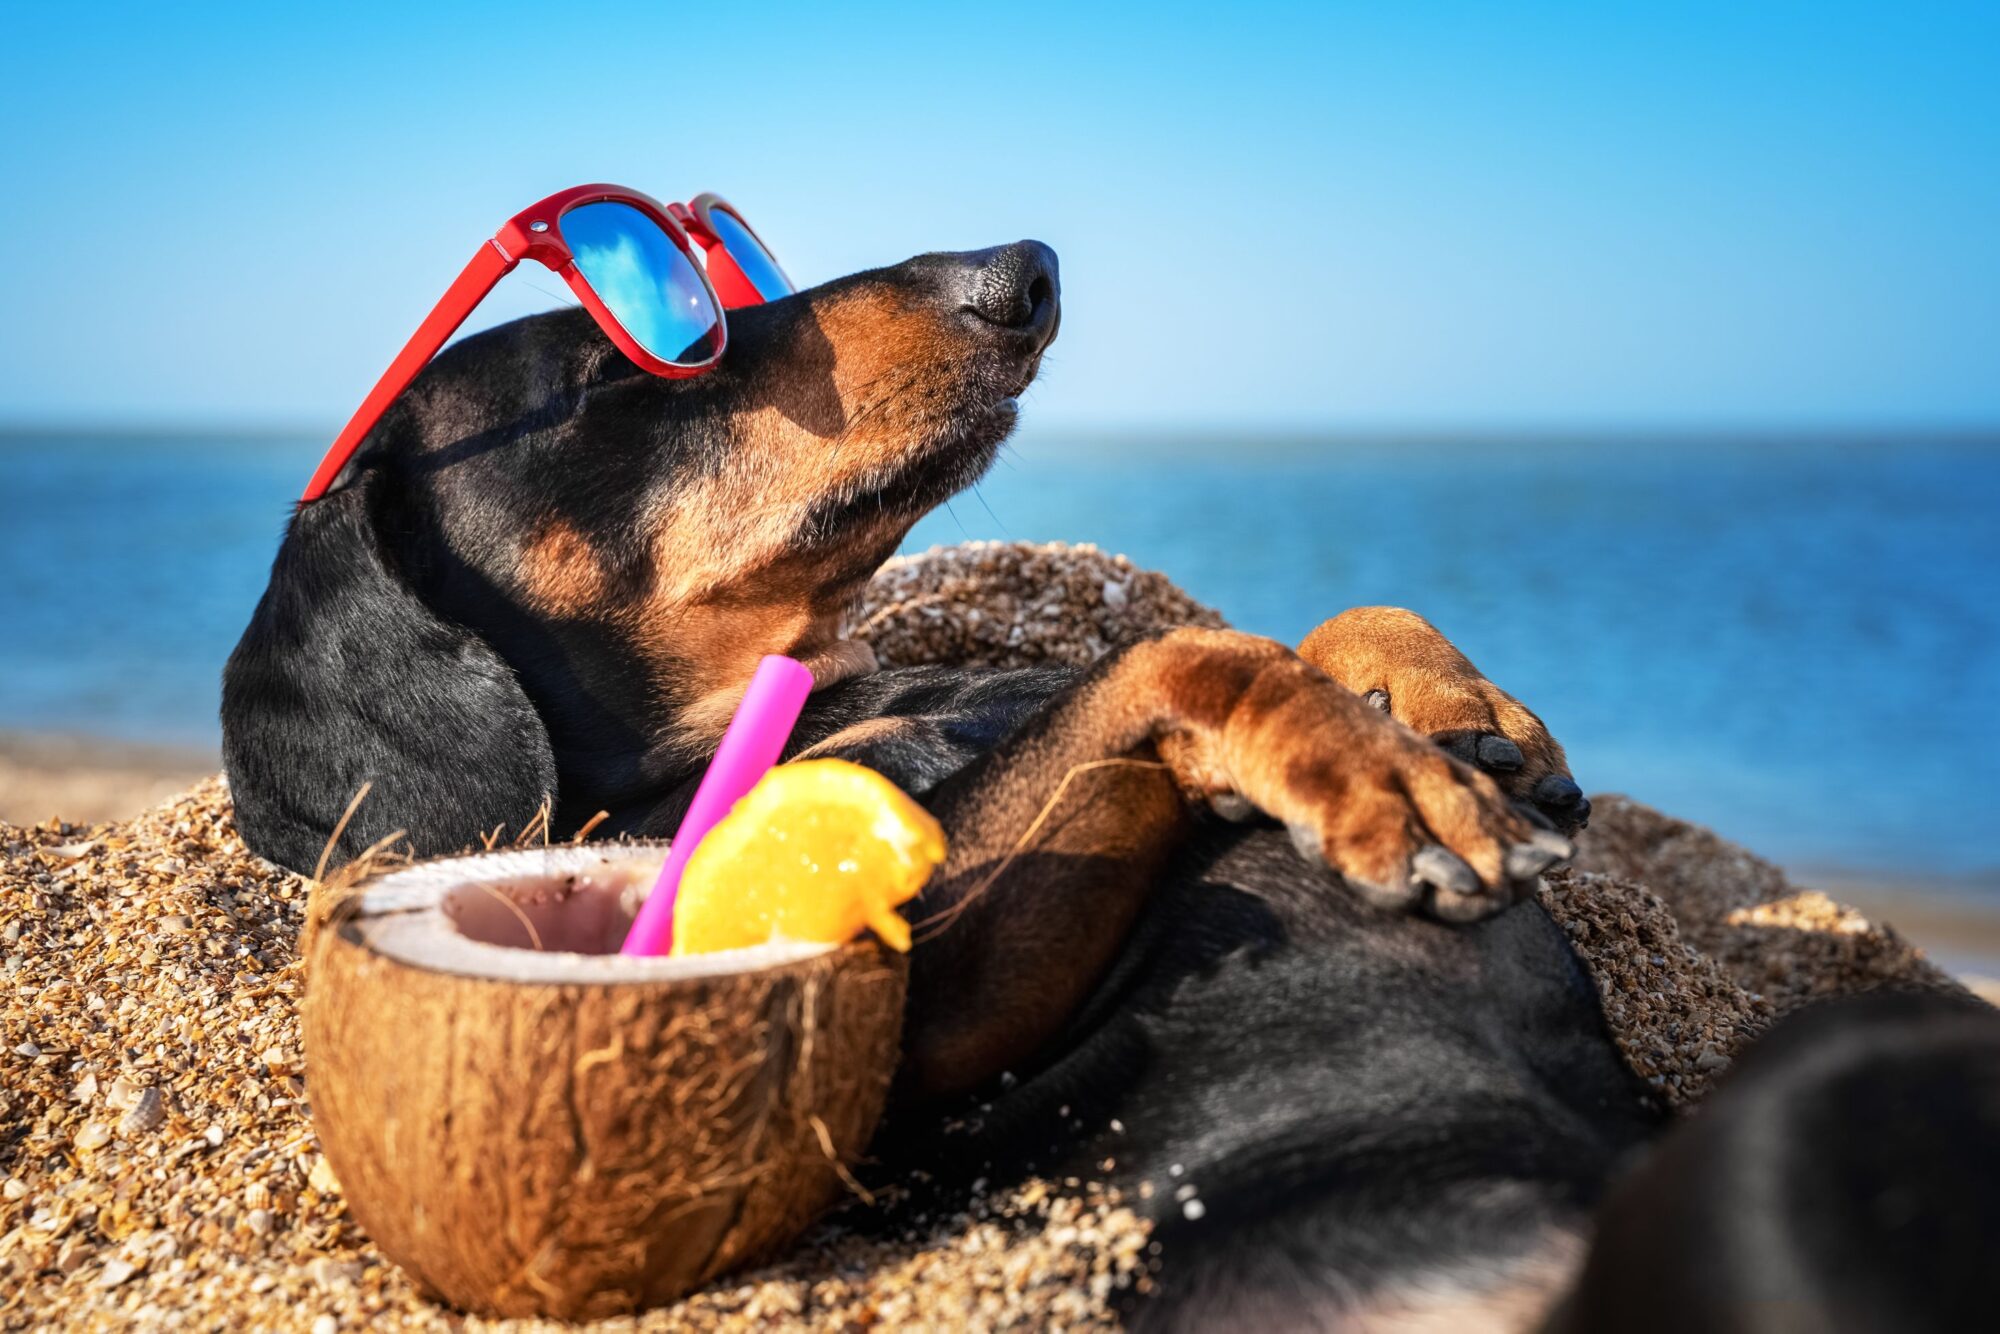 A dachshund lounging on the beach.